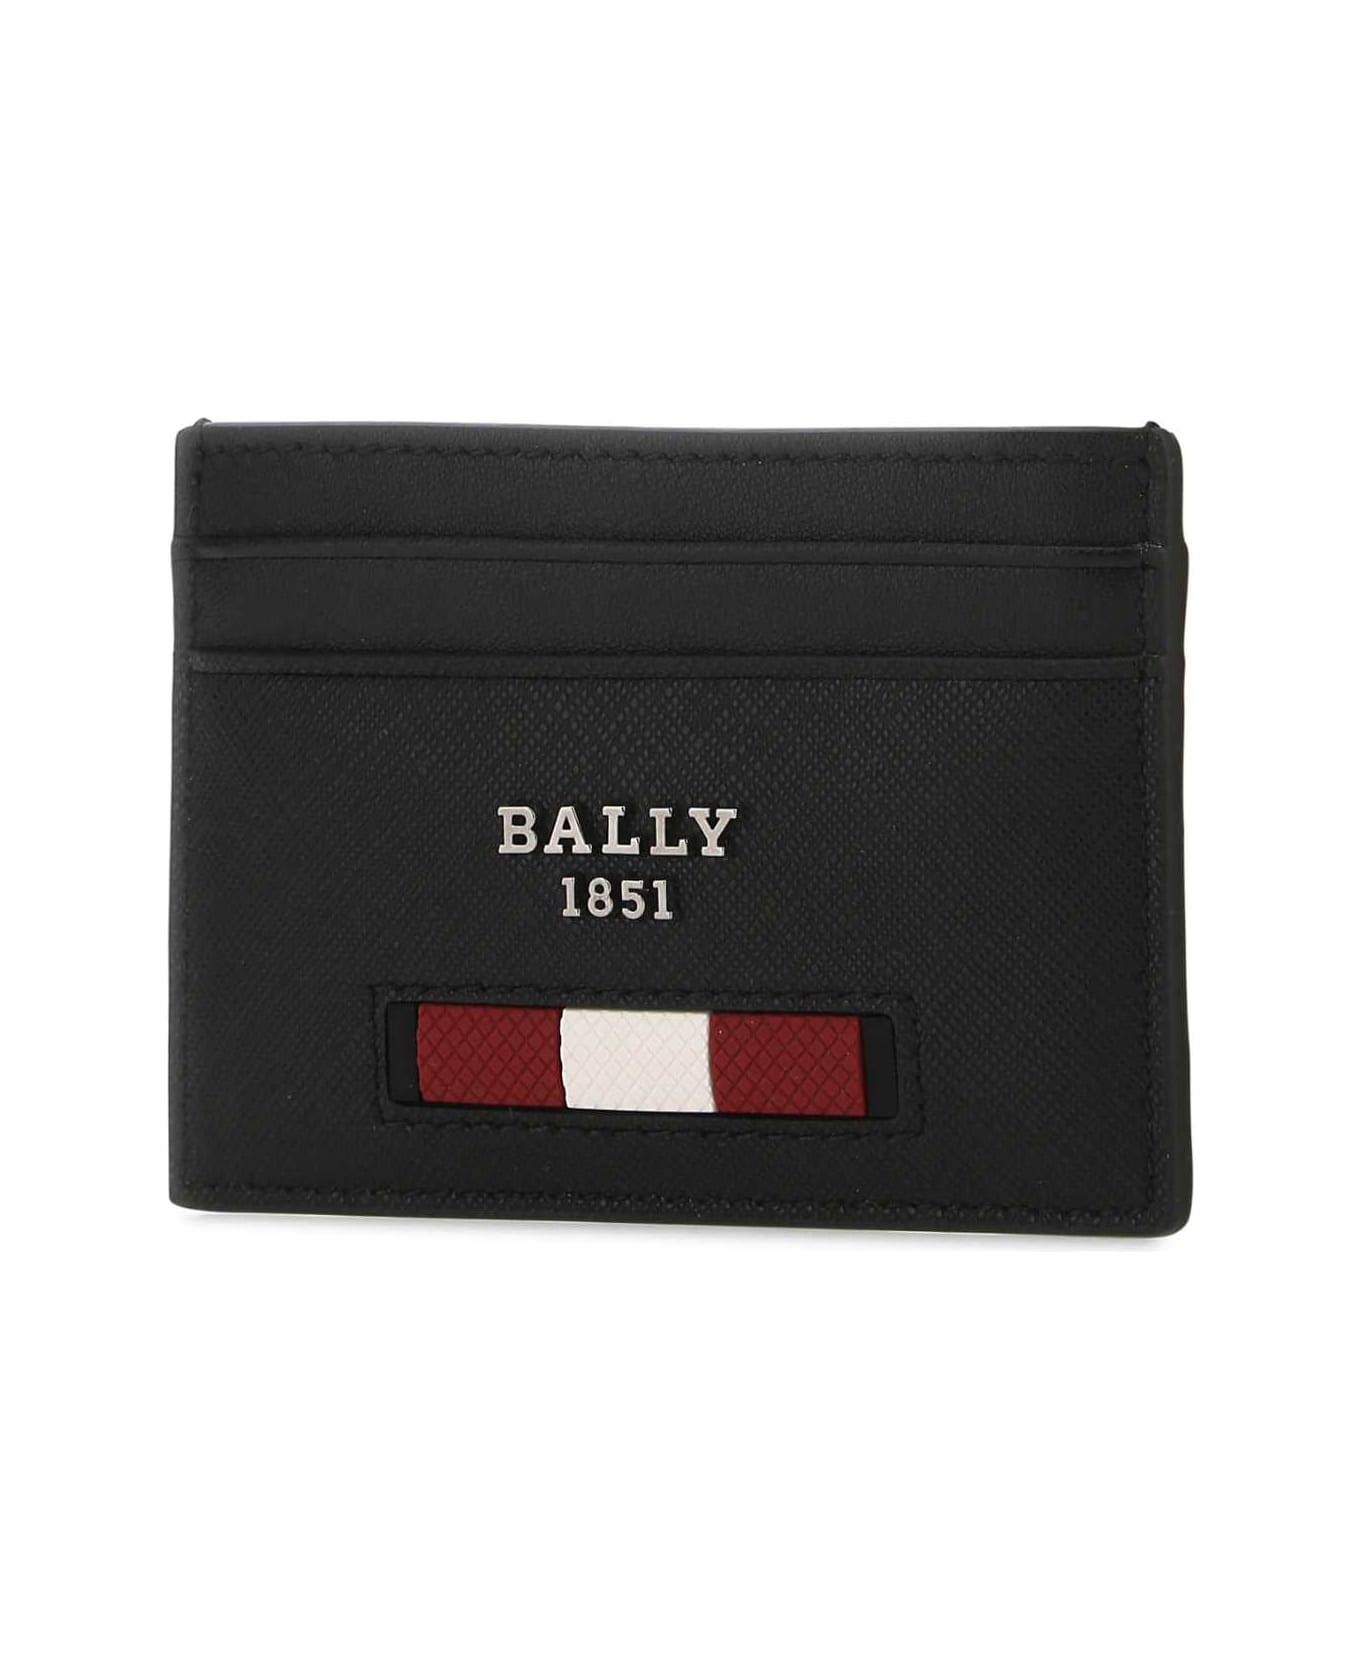 Bally Black Leather Card Holder - Black